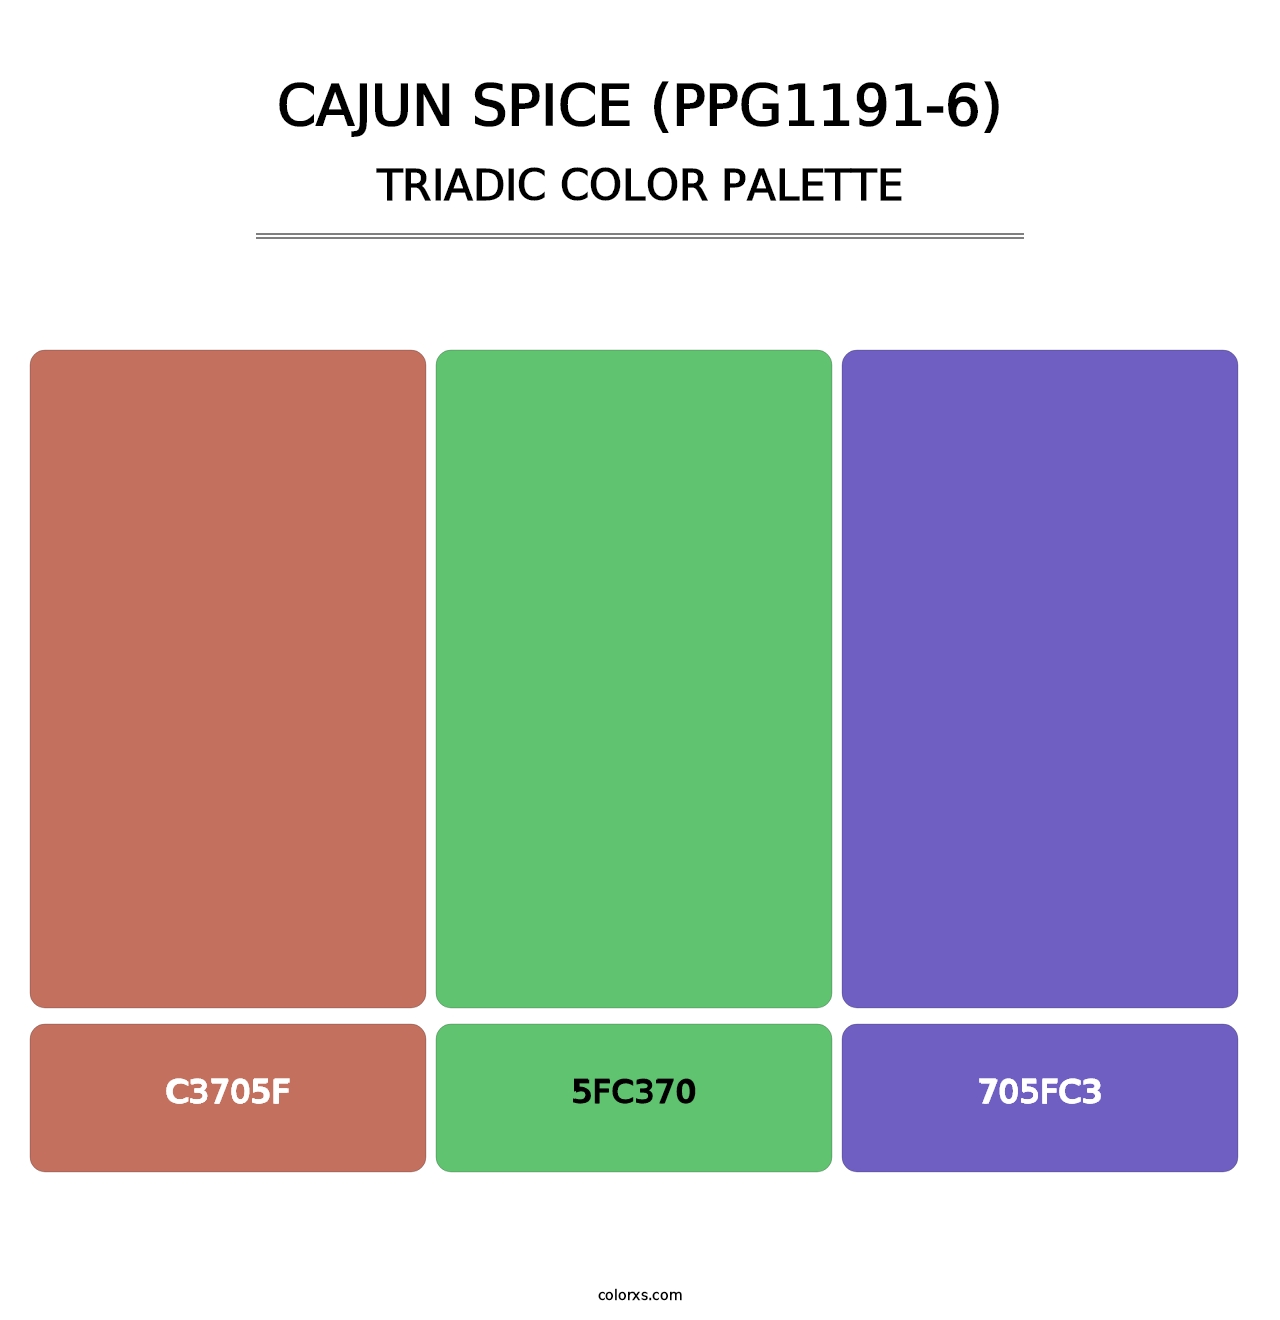 Cajun Spice (PPG1191-6) - Triadic Color Palette